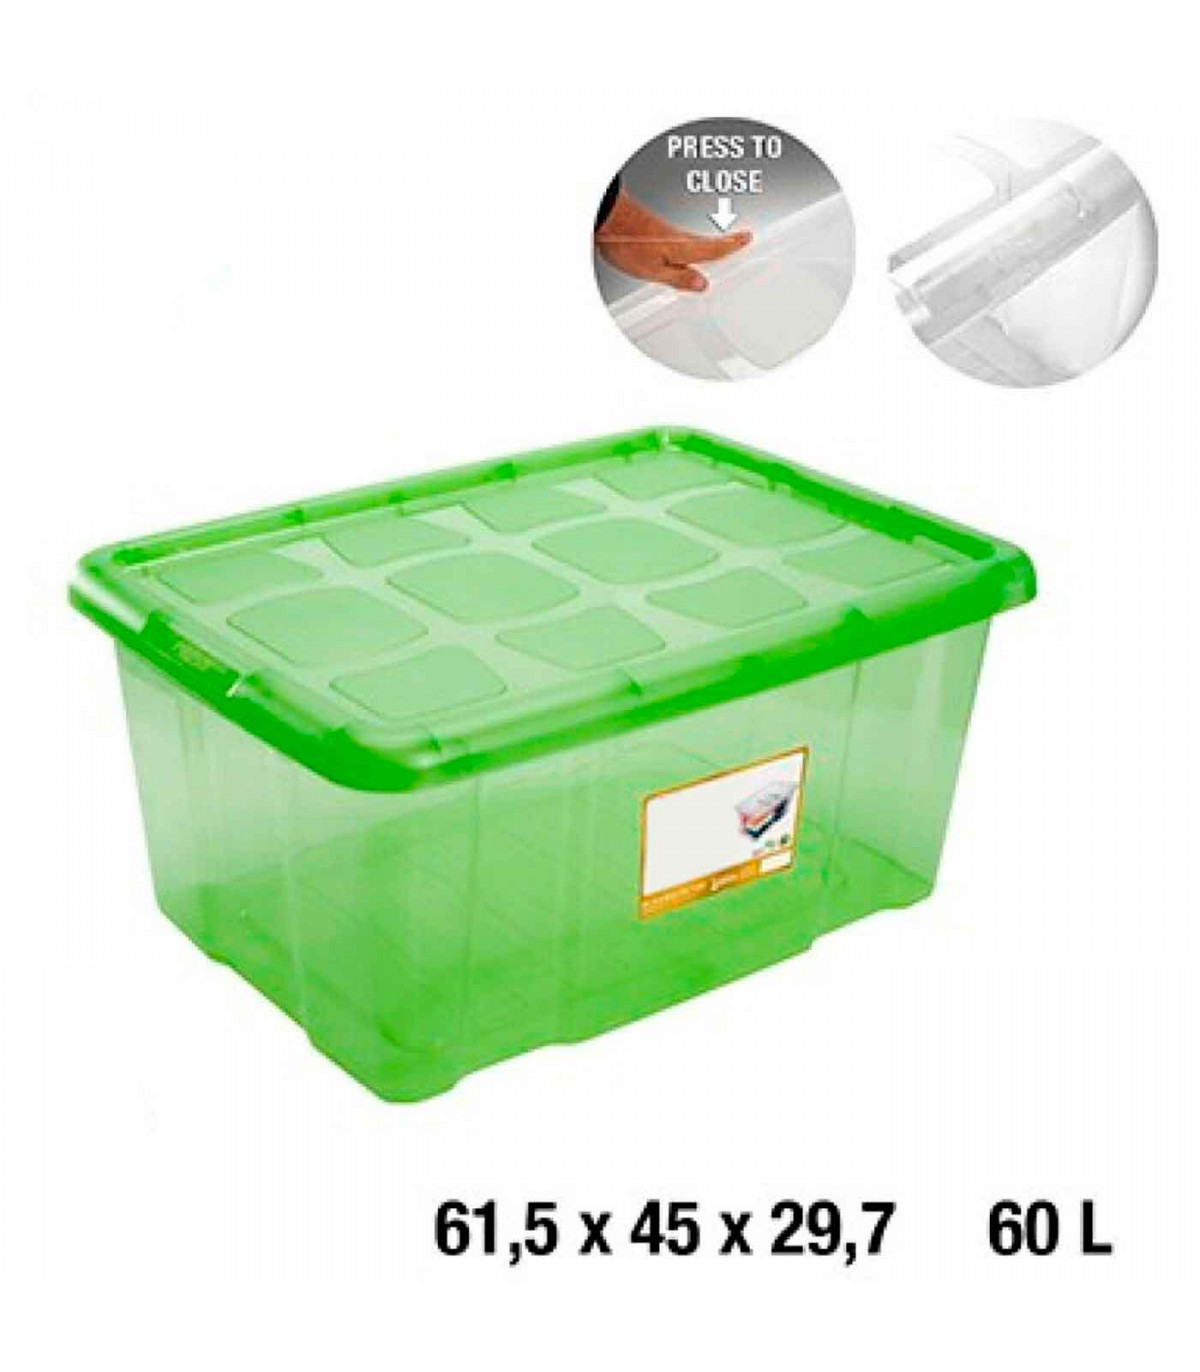 Caja almacenaje con tapa, plástico translúcido, cajón multiusos, almacenamiento objetos, hogar, litros, 29,7